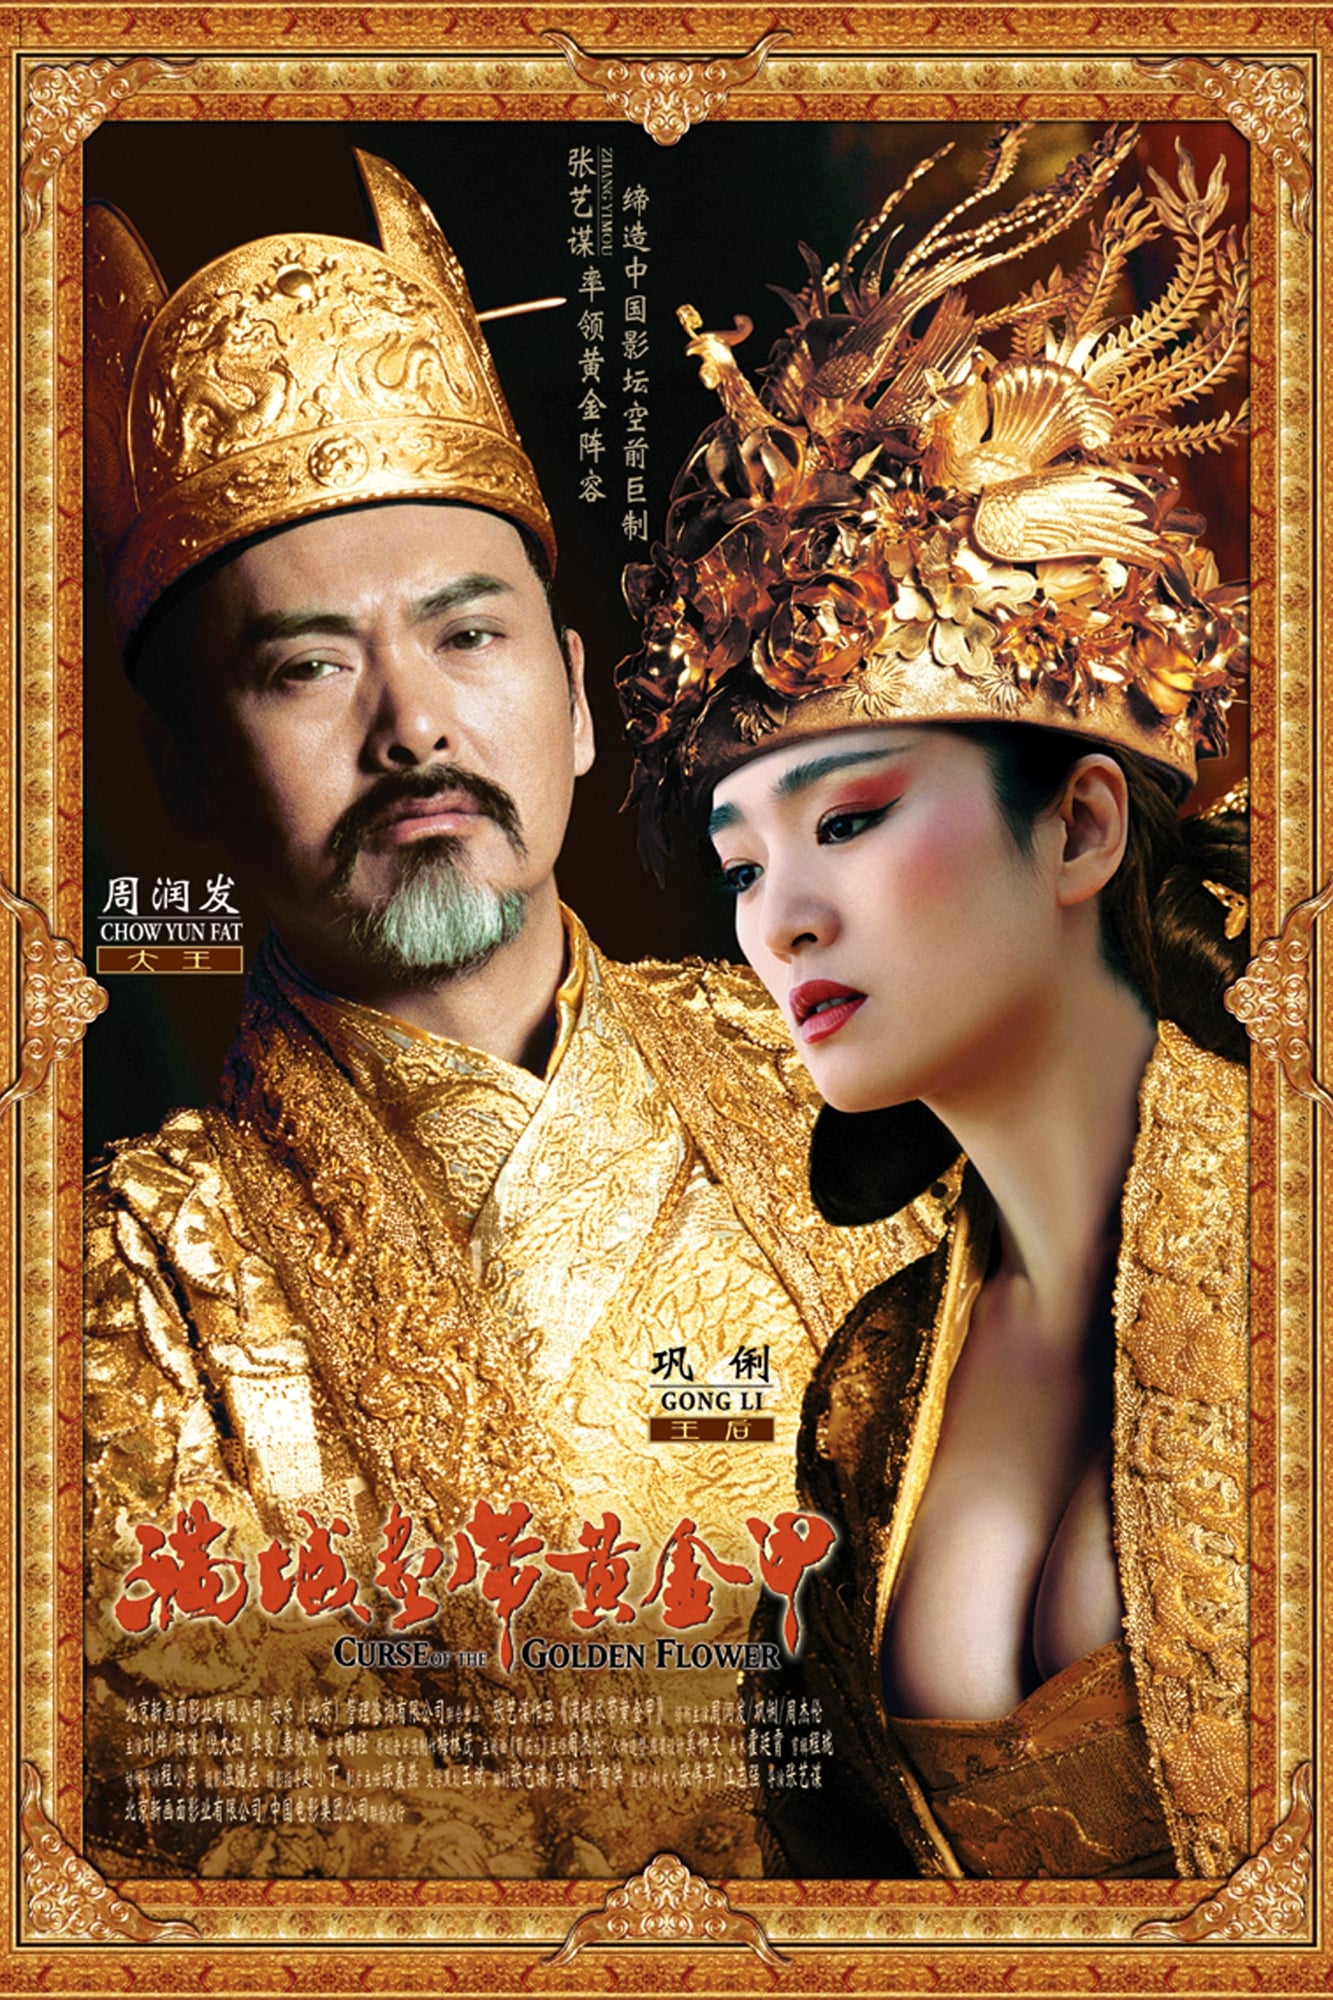 Hoàng Kim Giáp (Curse of the Golden Flower) [2006]